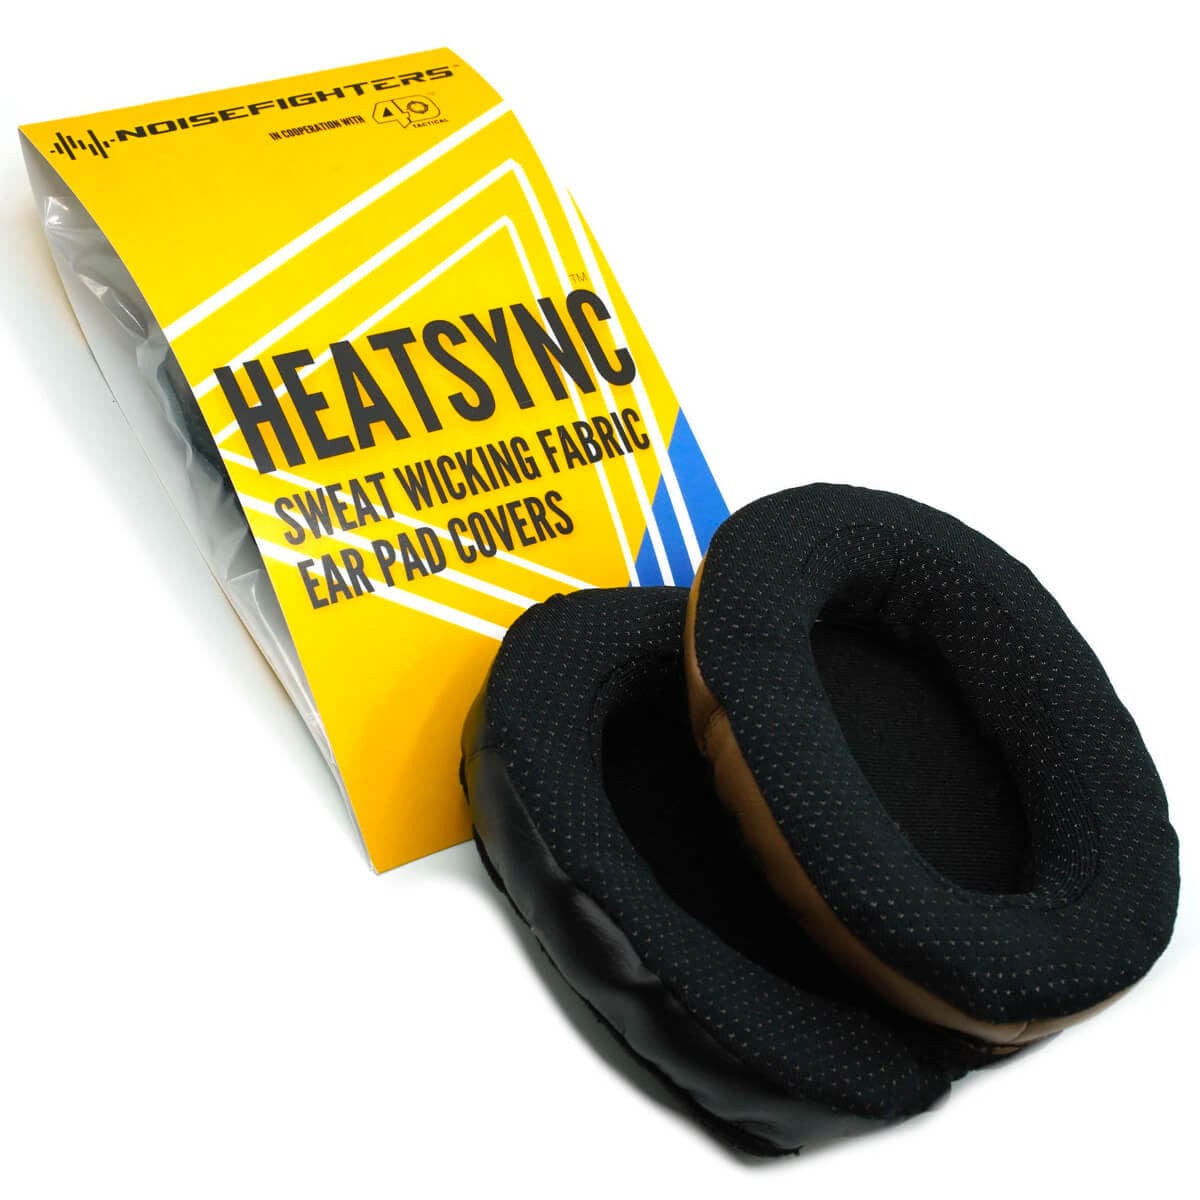 Noisefighters Heatsync Sweat-Wicking Ear Pad Covers - Black & Coyote Packaging